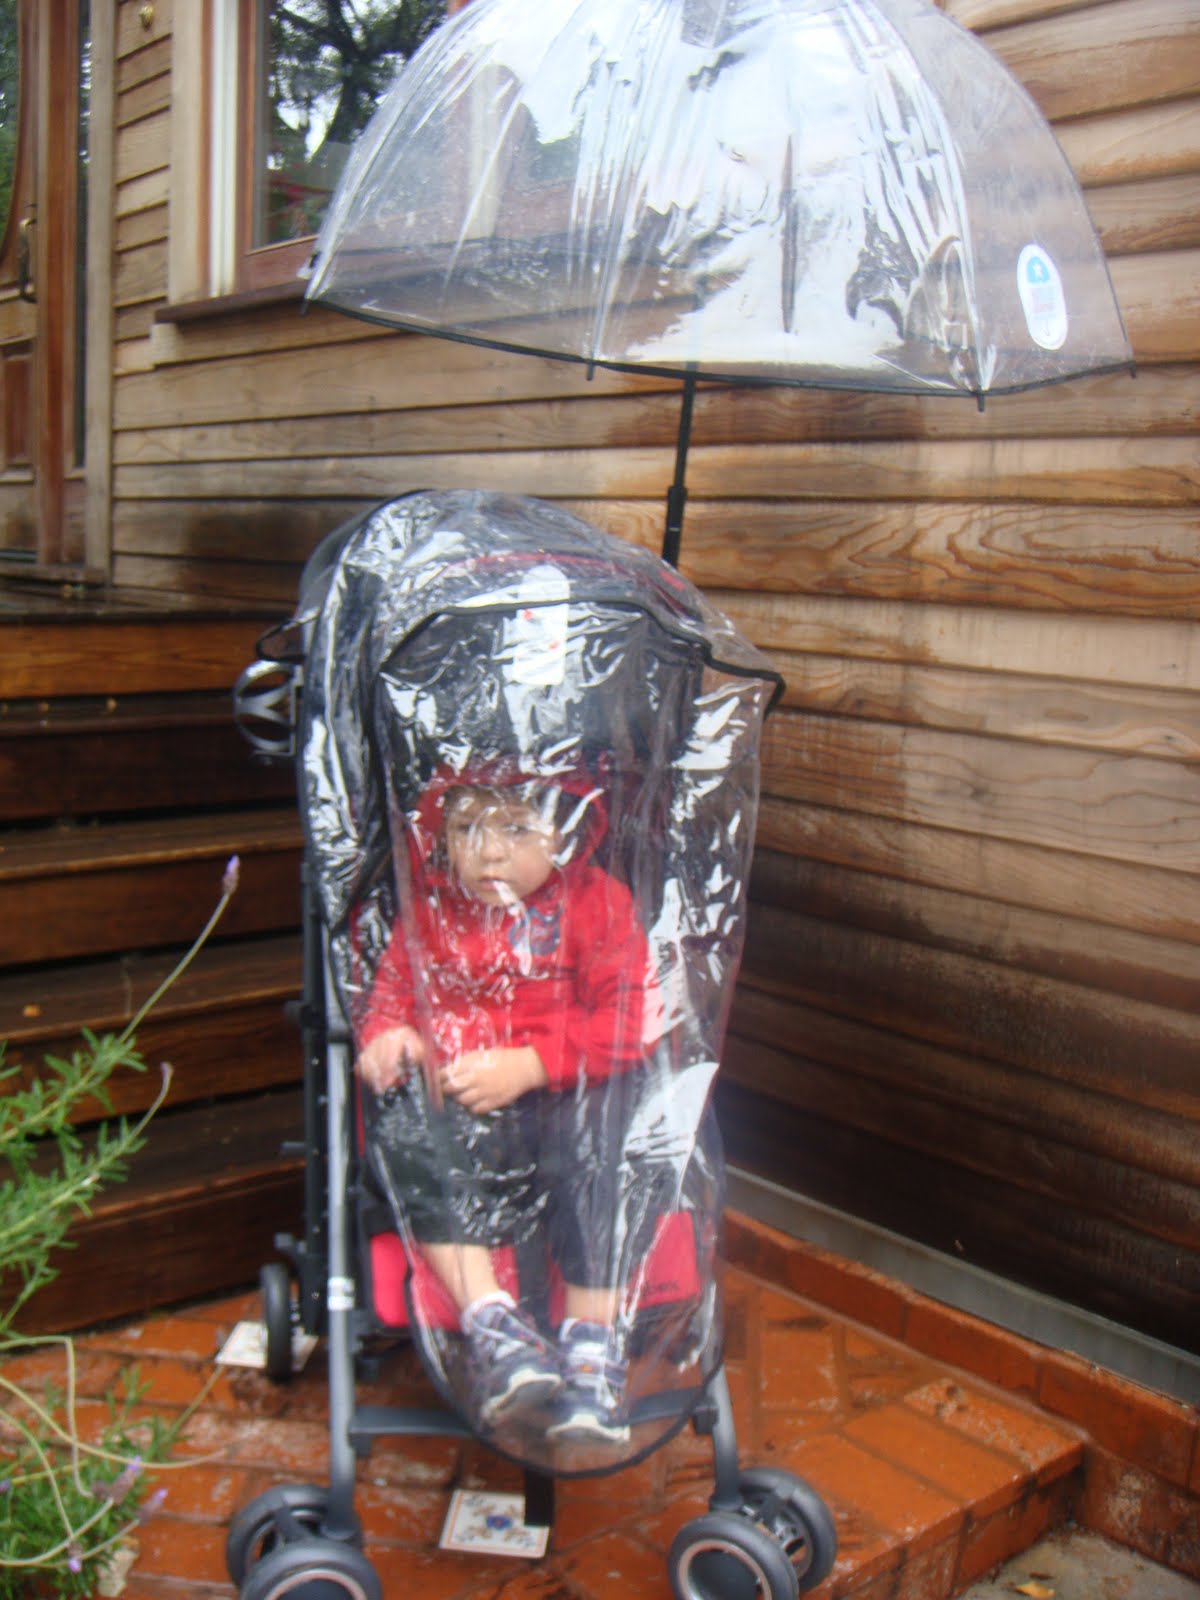 cybex onyx umbrella stroller